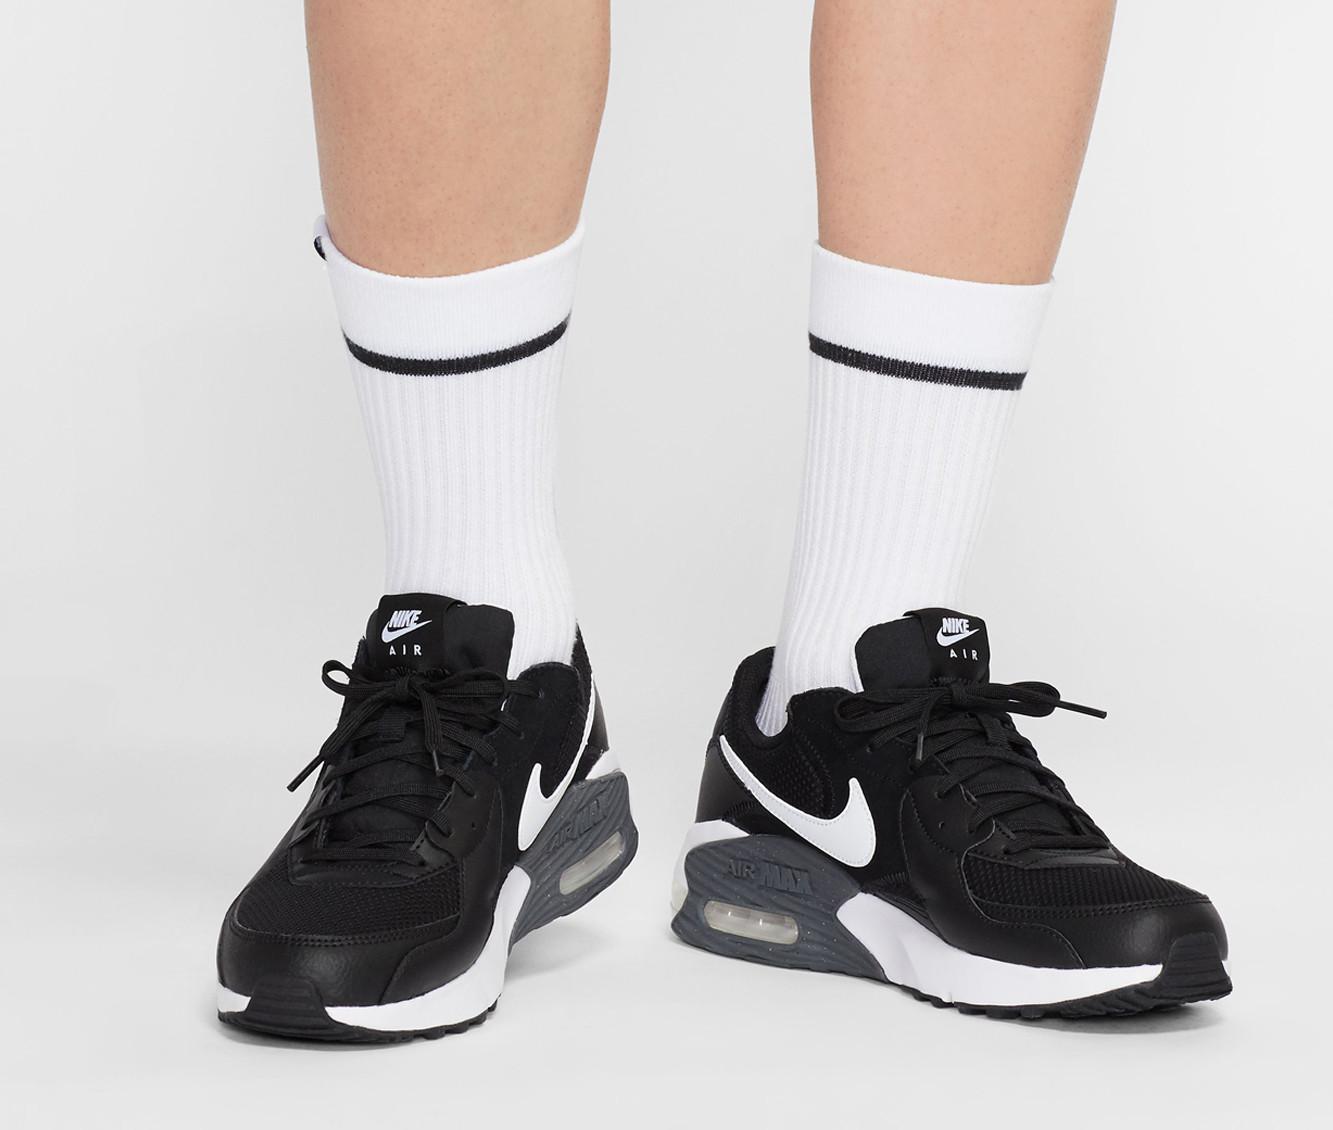 Nike Men's Air Max 90 Shoes, Size 9.5, Tan/Orange/White